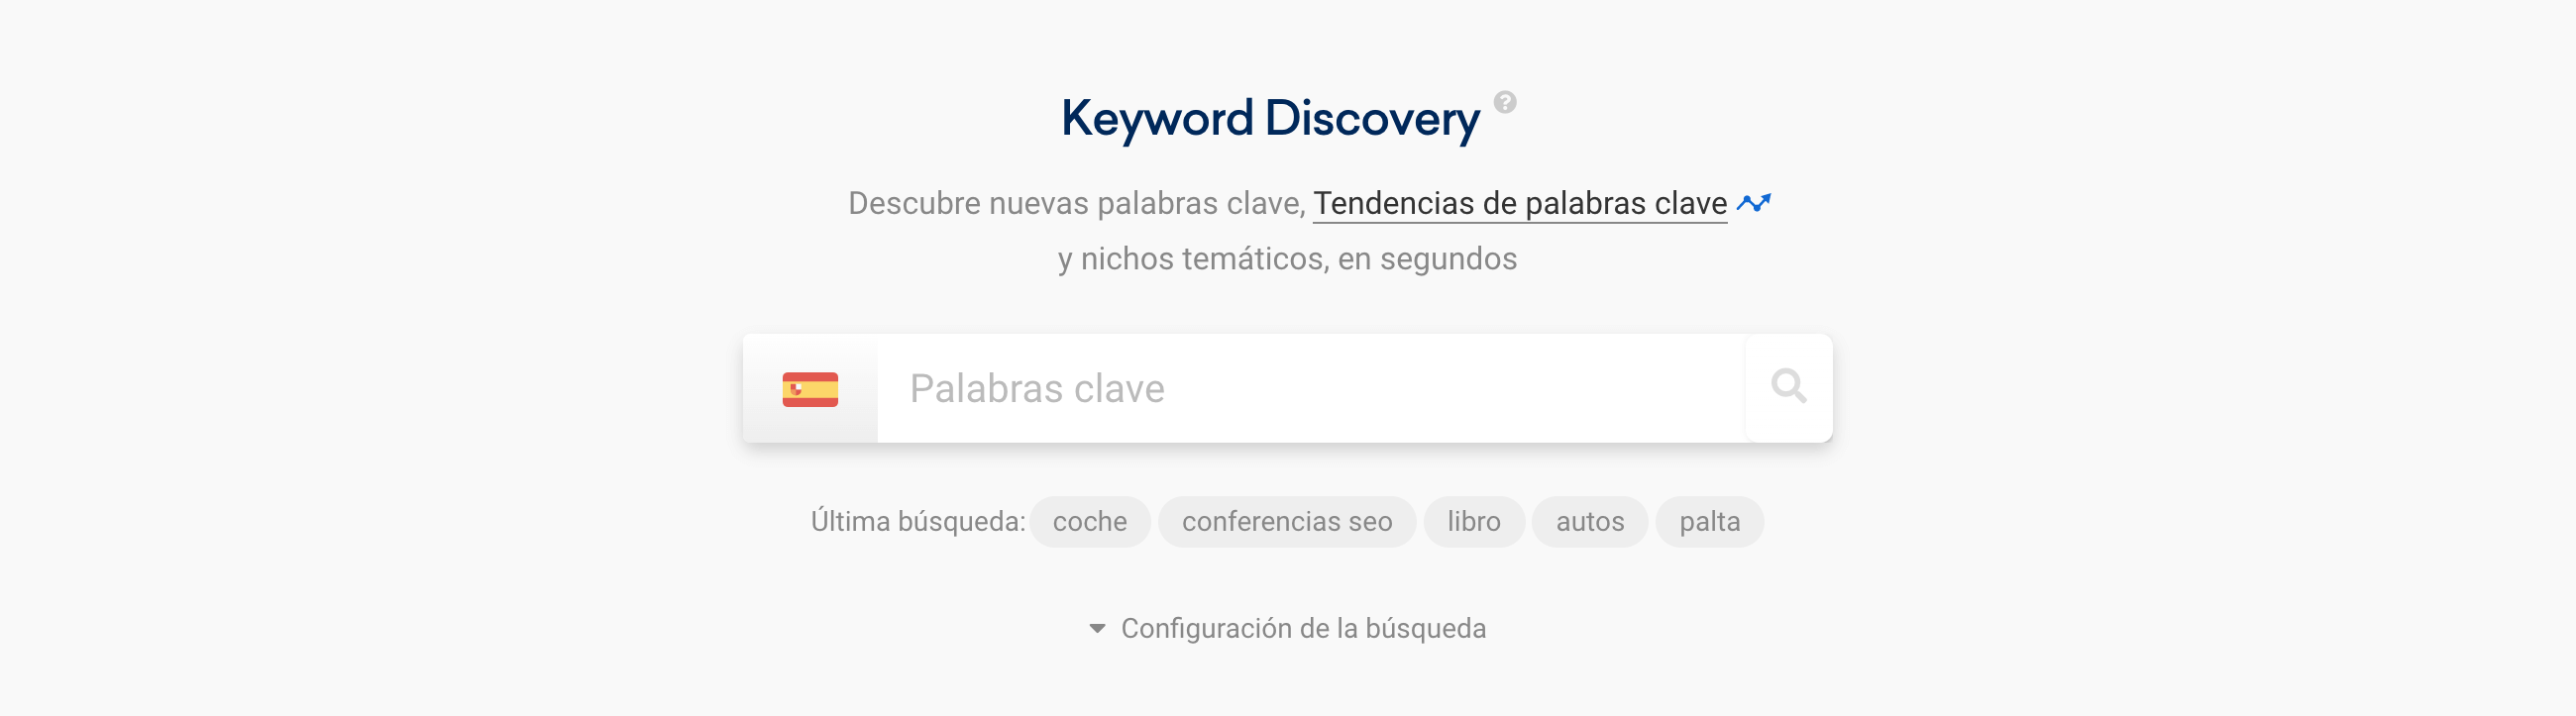 Keyword Discovery introducir palabra clave